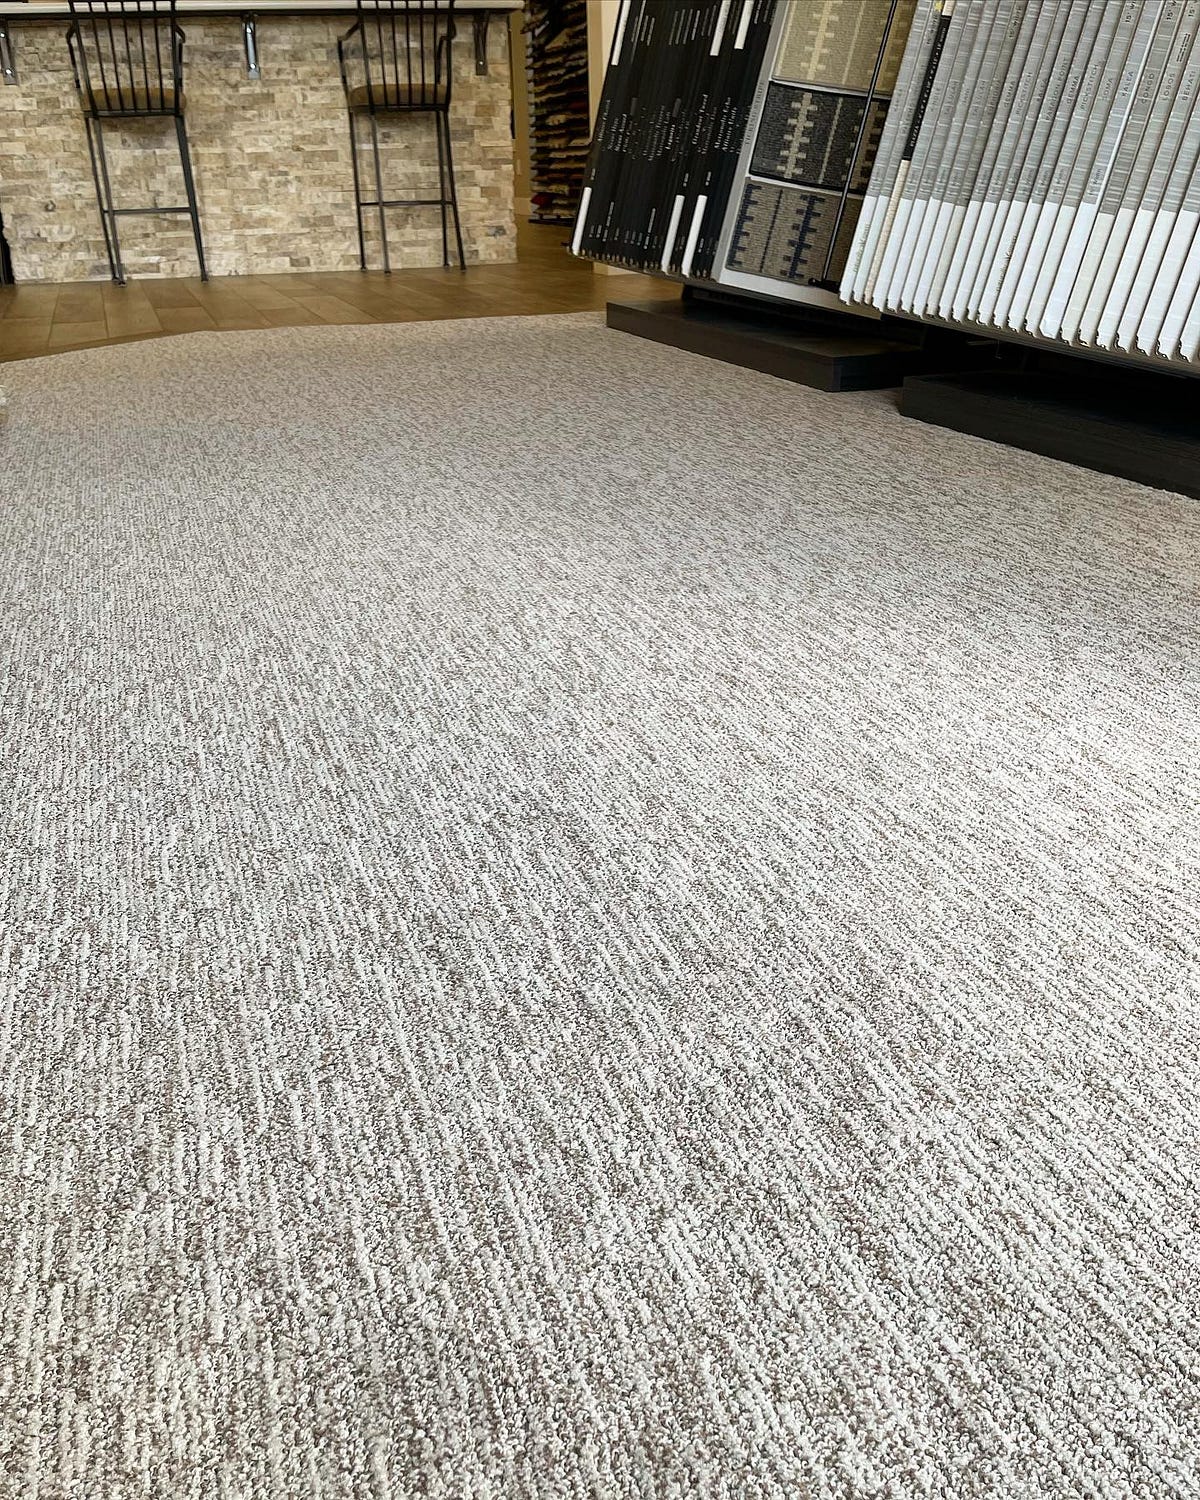 Choosing The Best Residential Carpet Brands Warren MI- What Should You Consider? | by Flooringmagiccarpet | Feb, 2024 | Medium